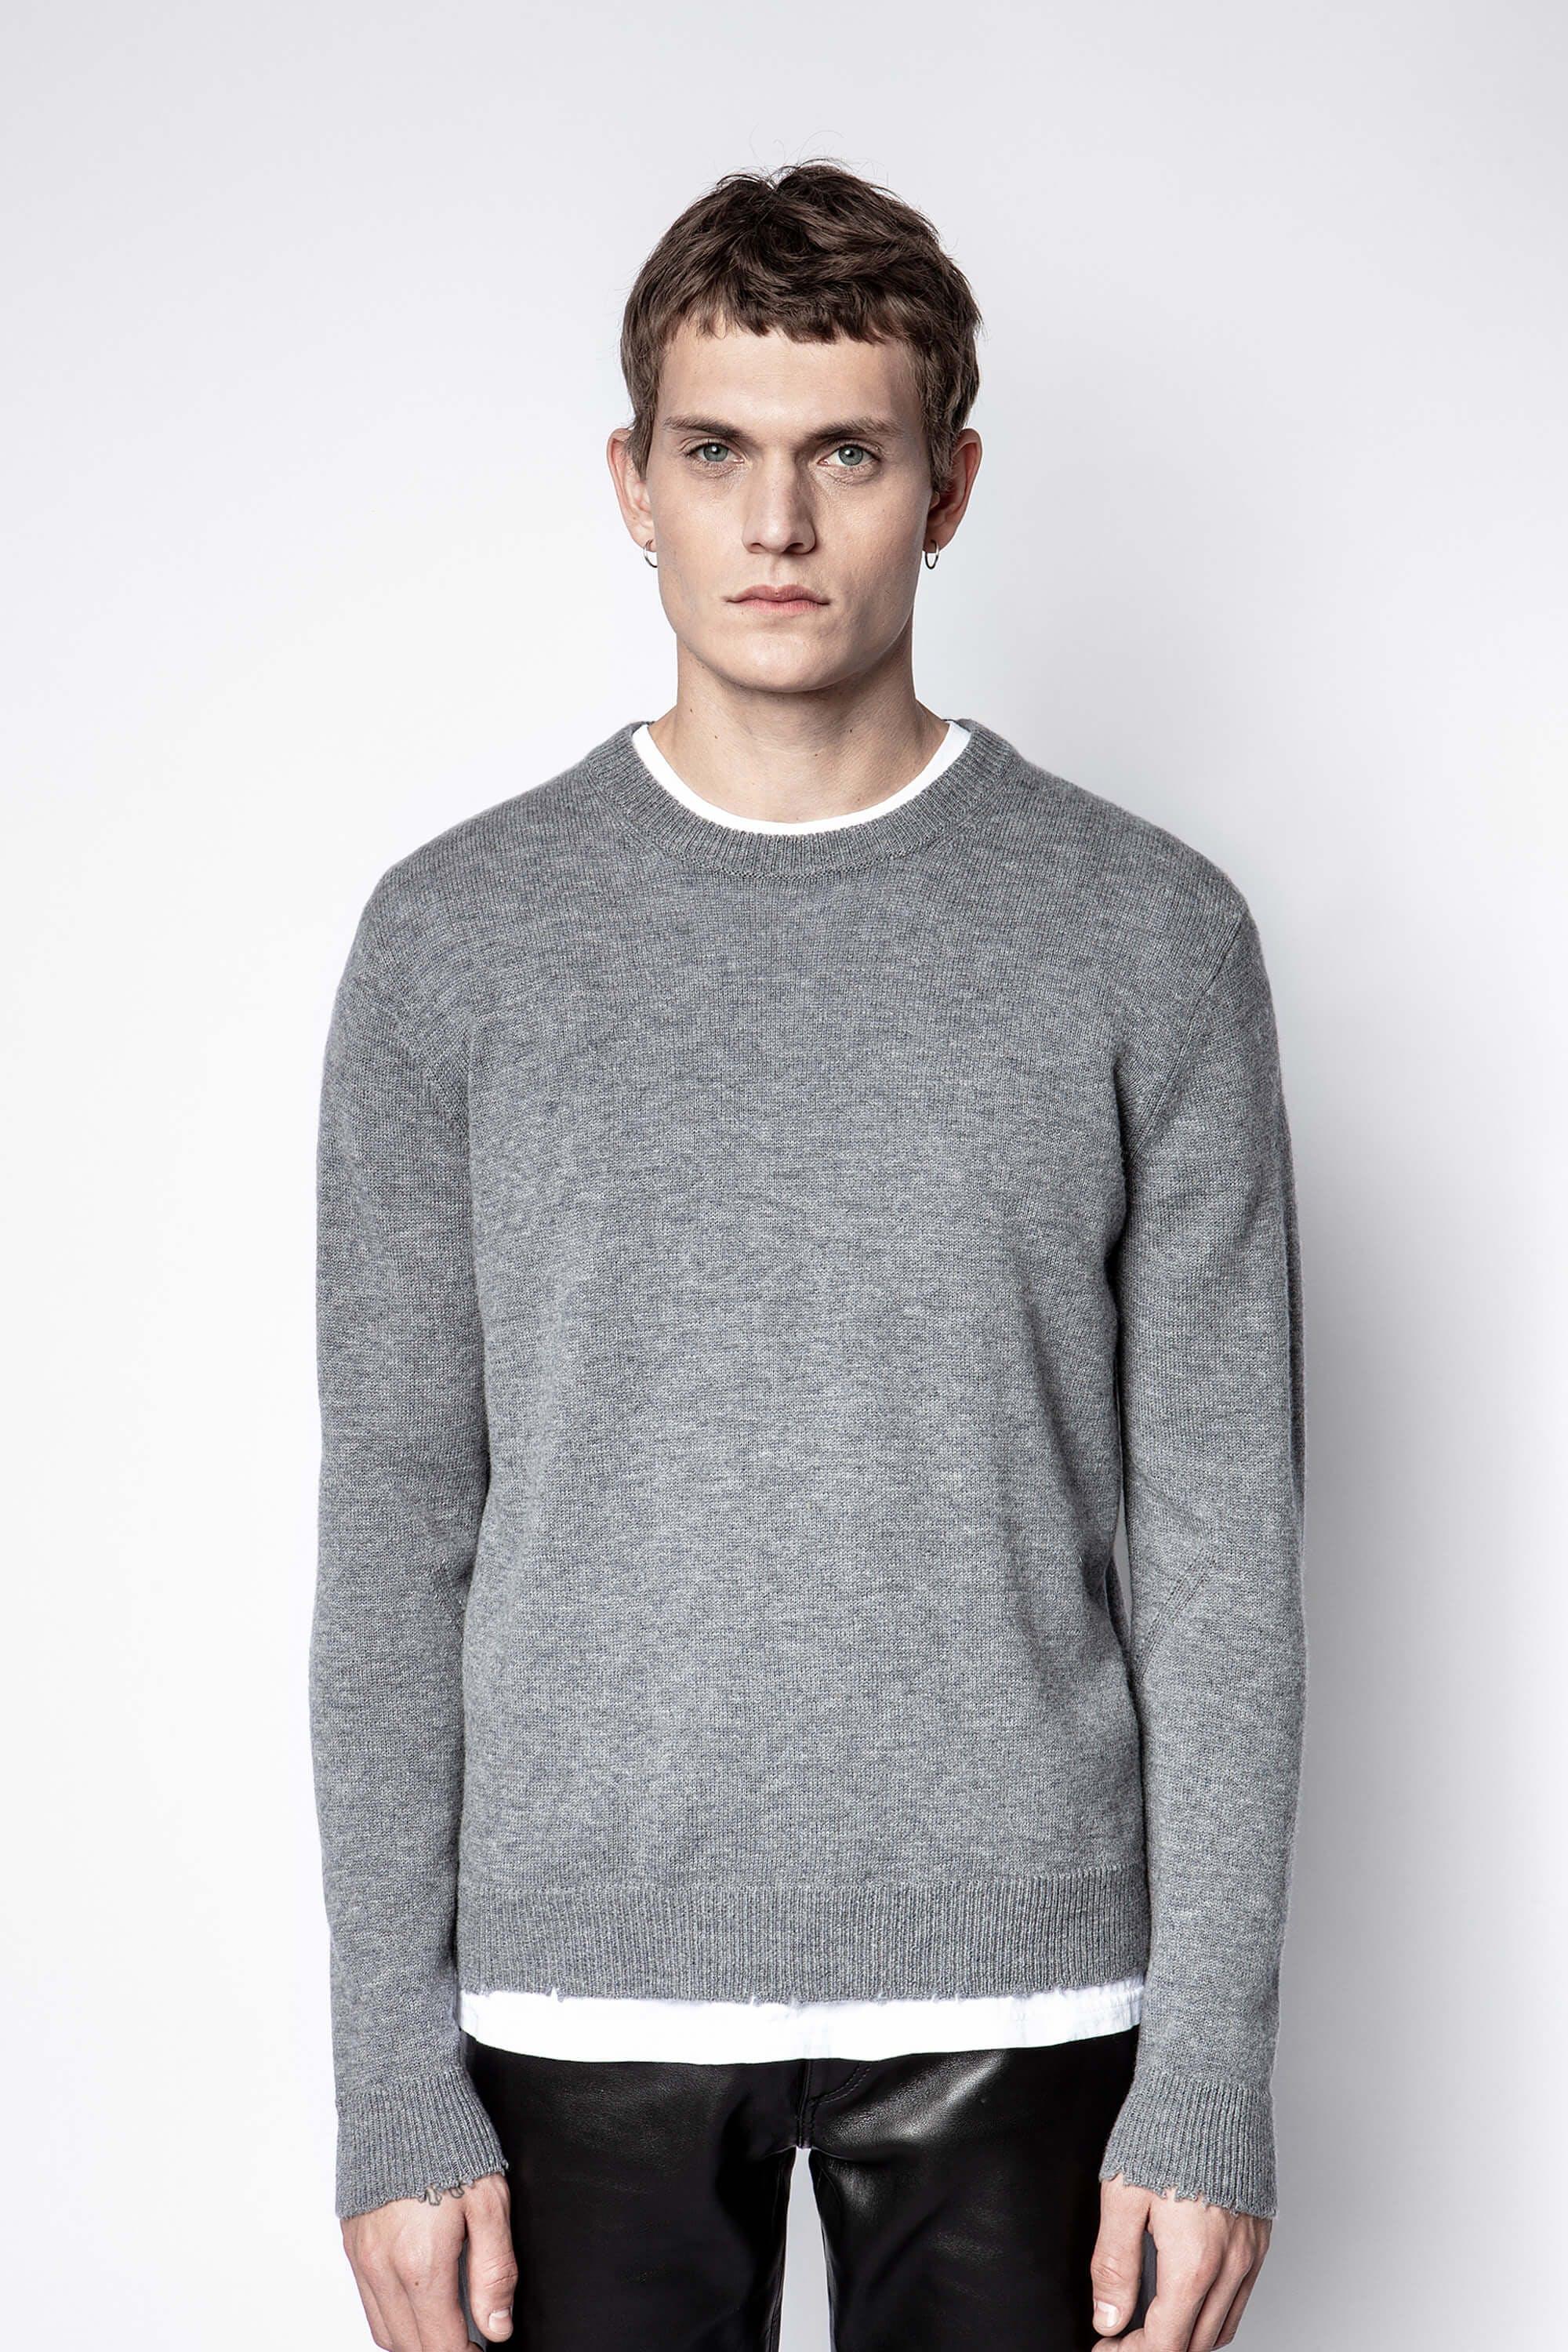 Zadig & Voltaire Liam Sweater in Grey (Gray) for Men - Lyst